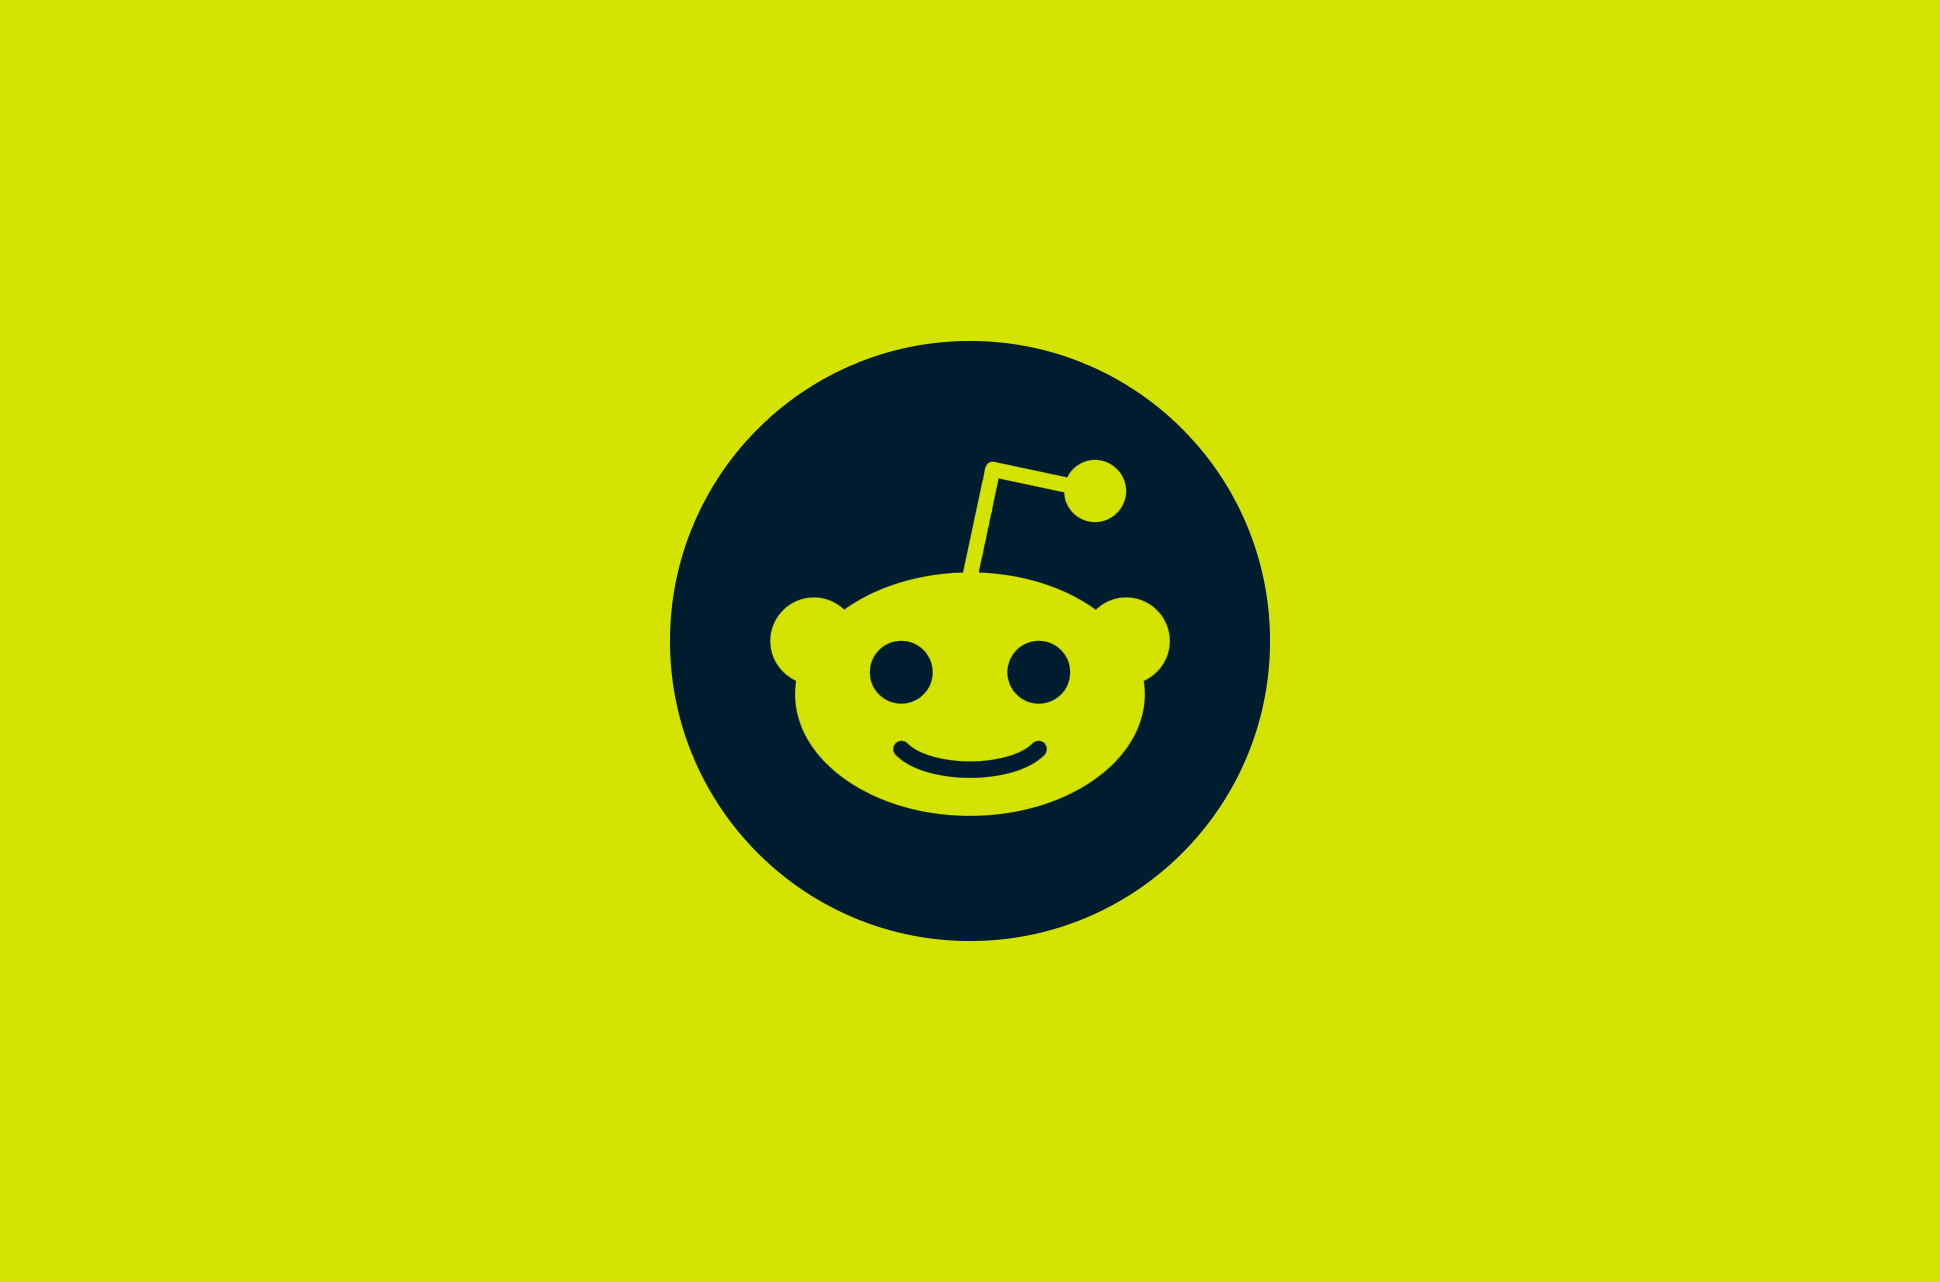 Reddit logo.